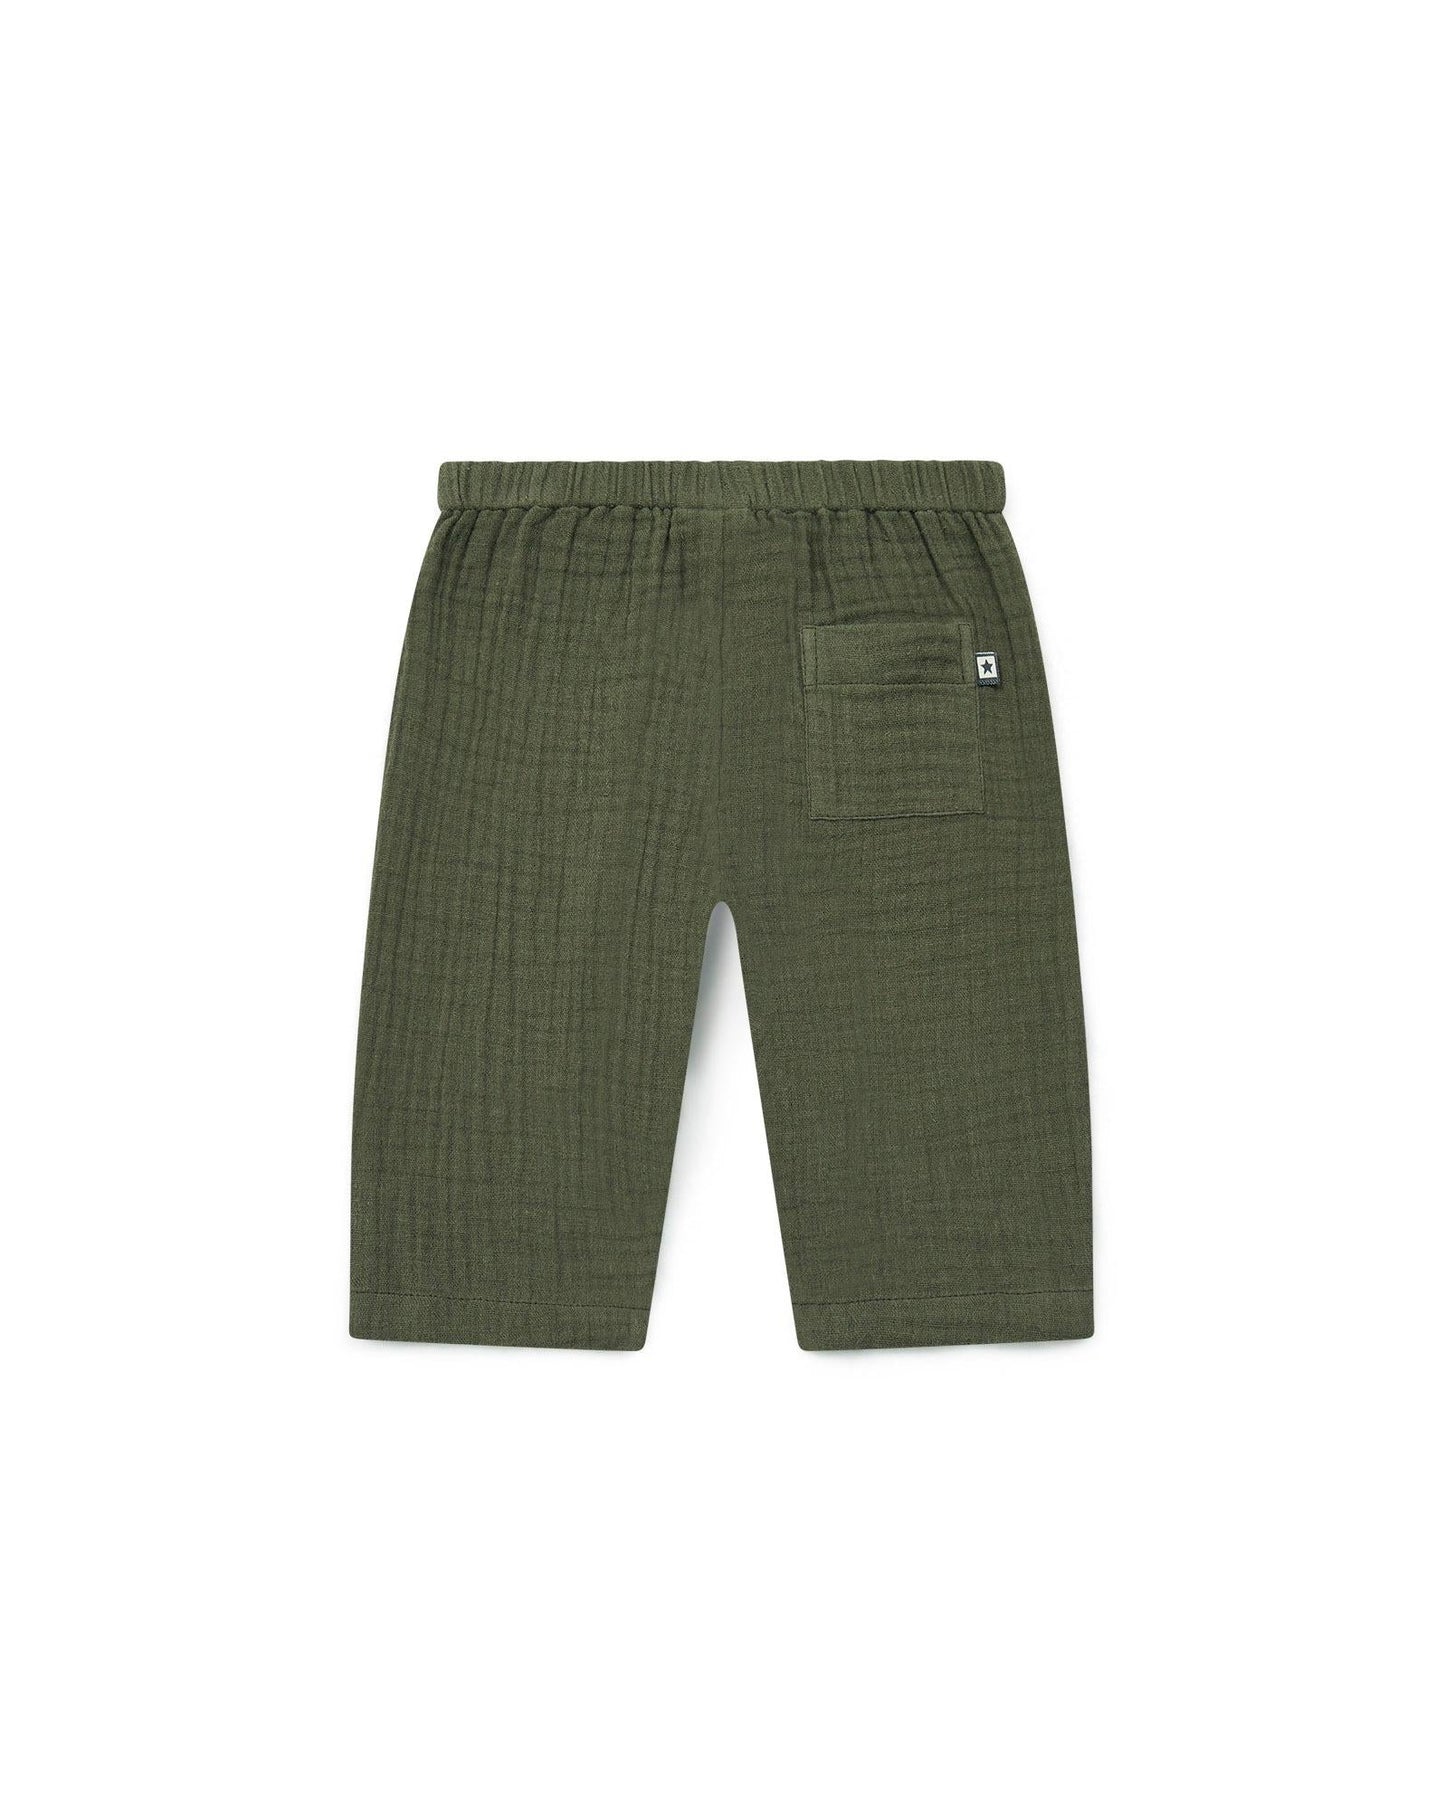 Trousers - Future Green Baby cotton gauze